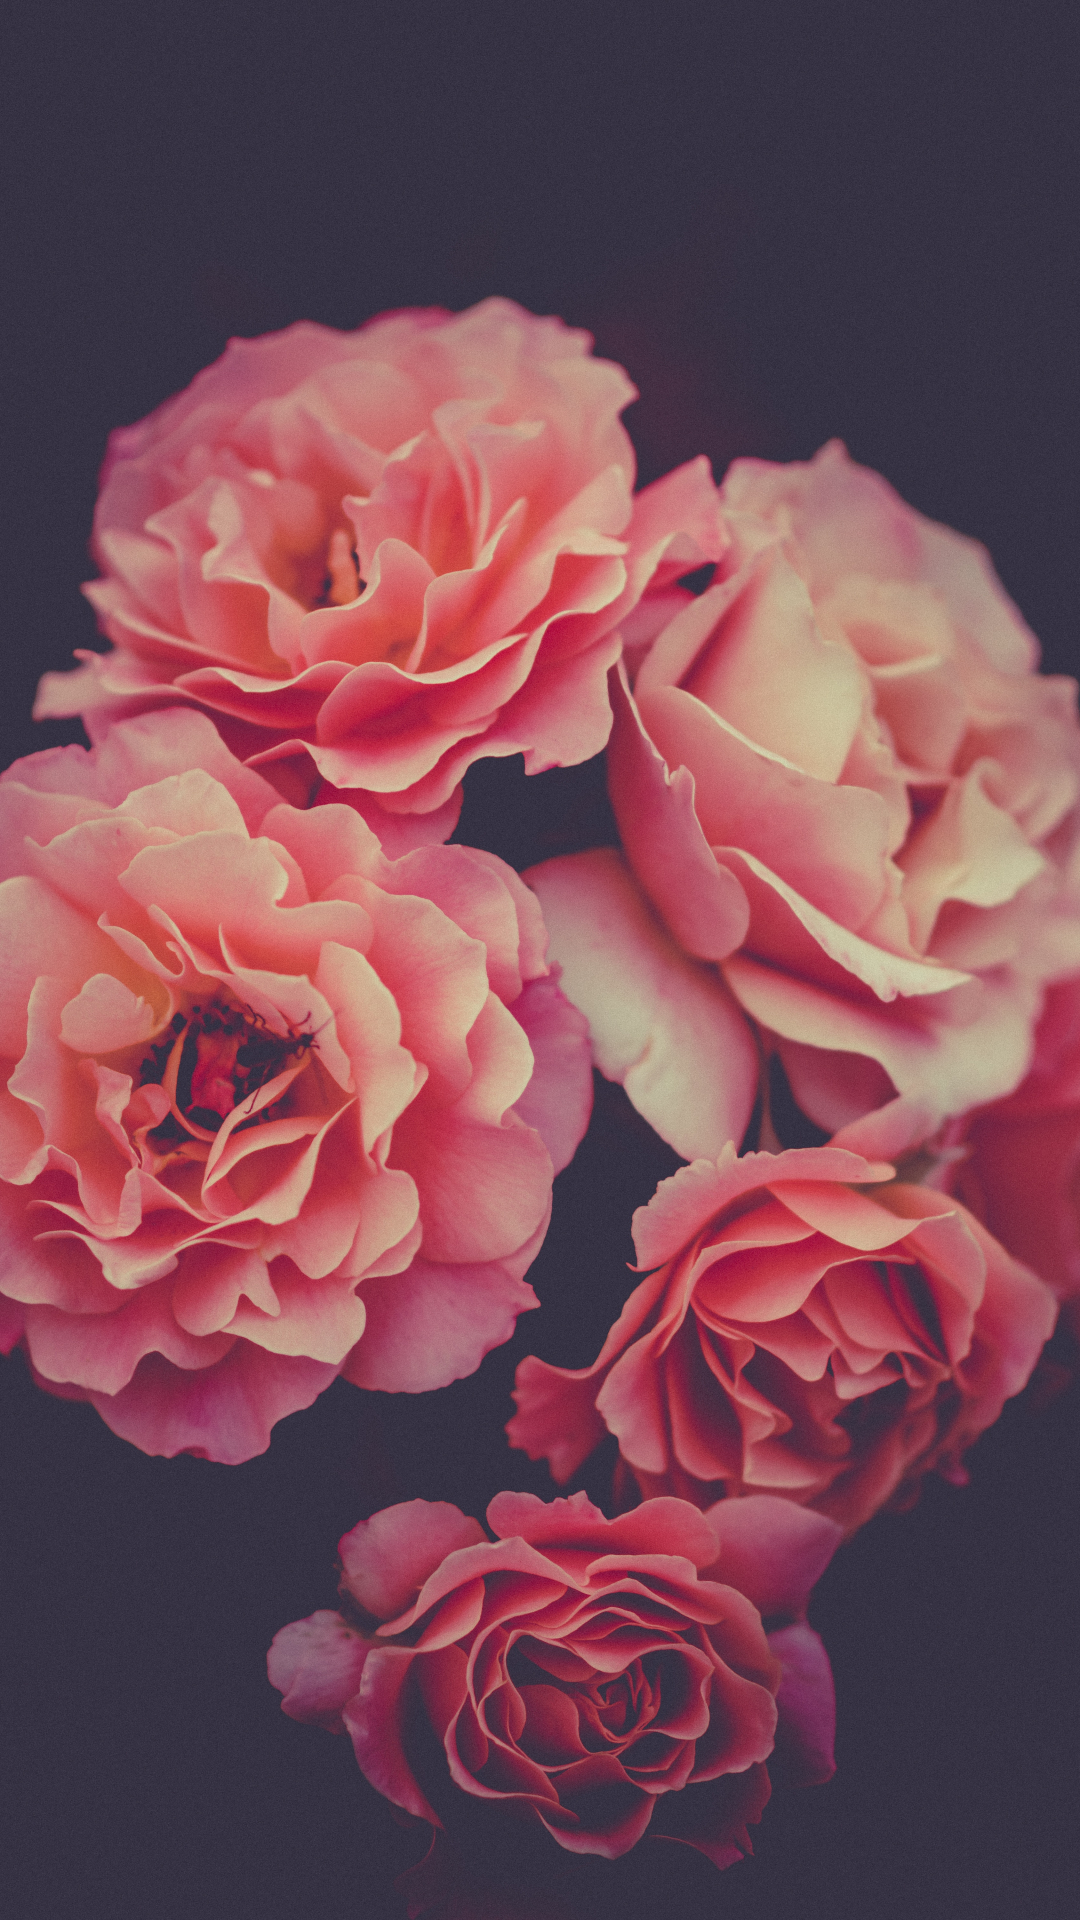 Rose Bouquet iPhone Wallpaper